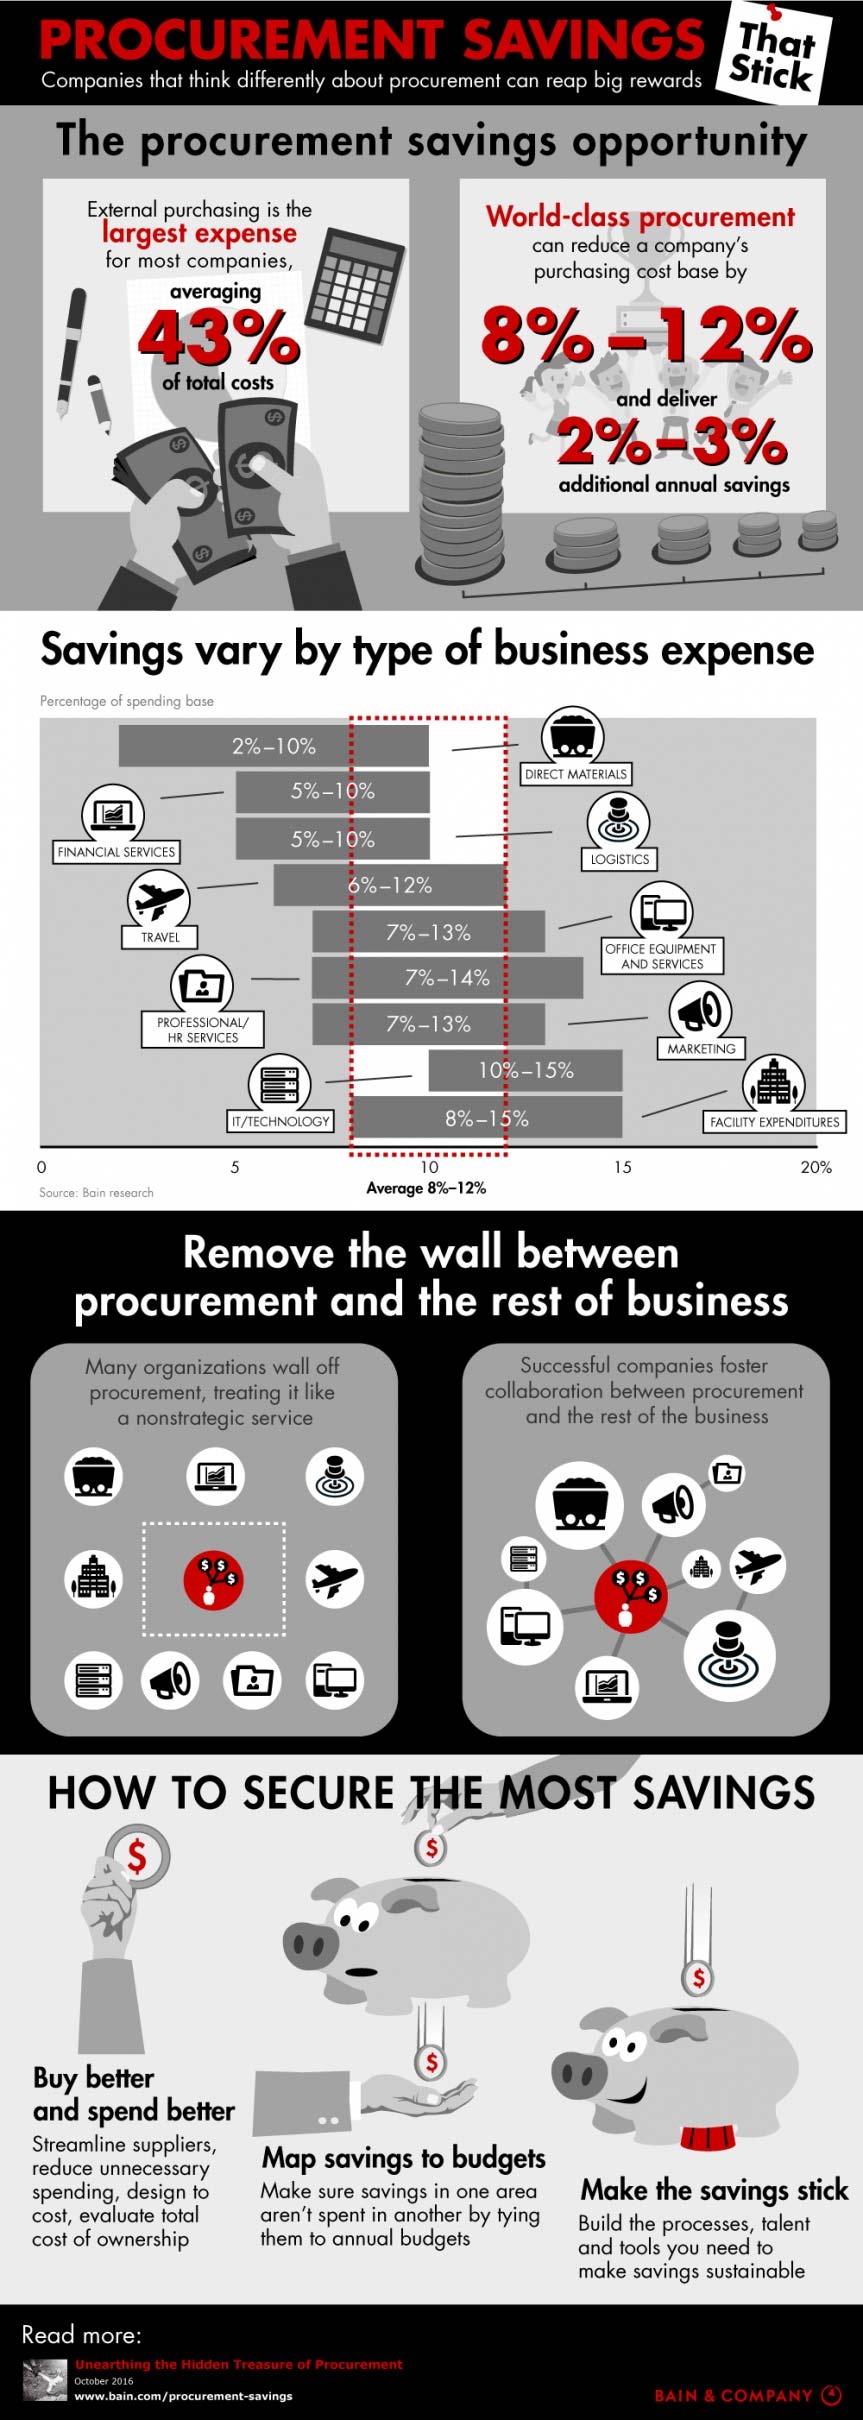 Infographic on procurements savings